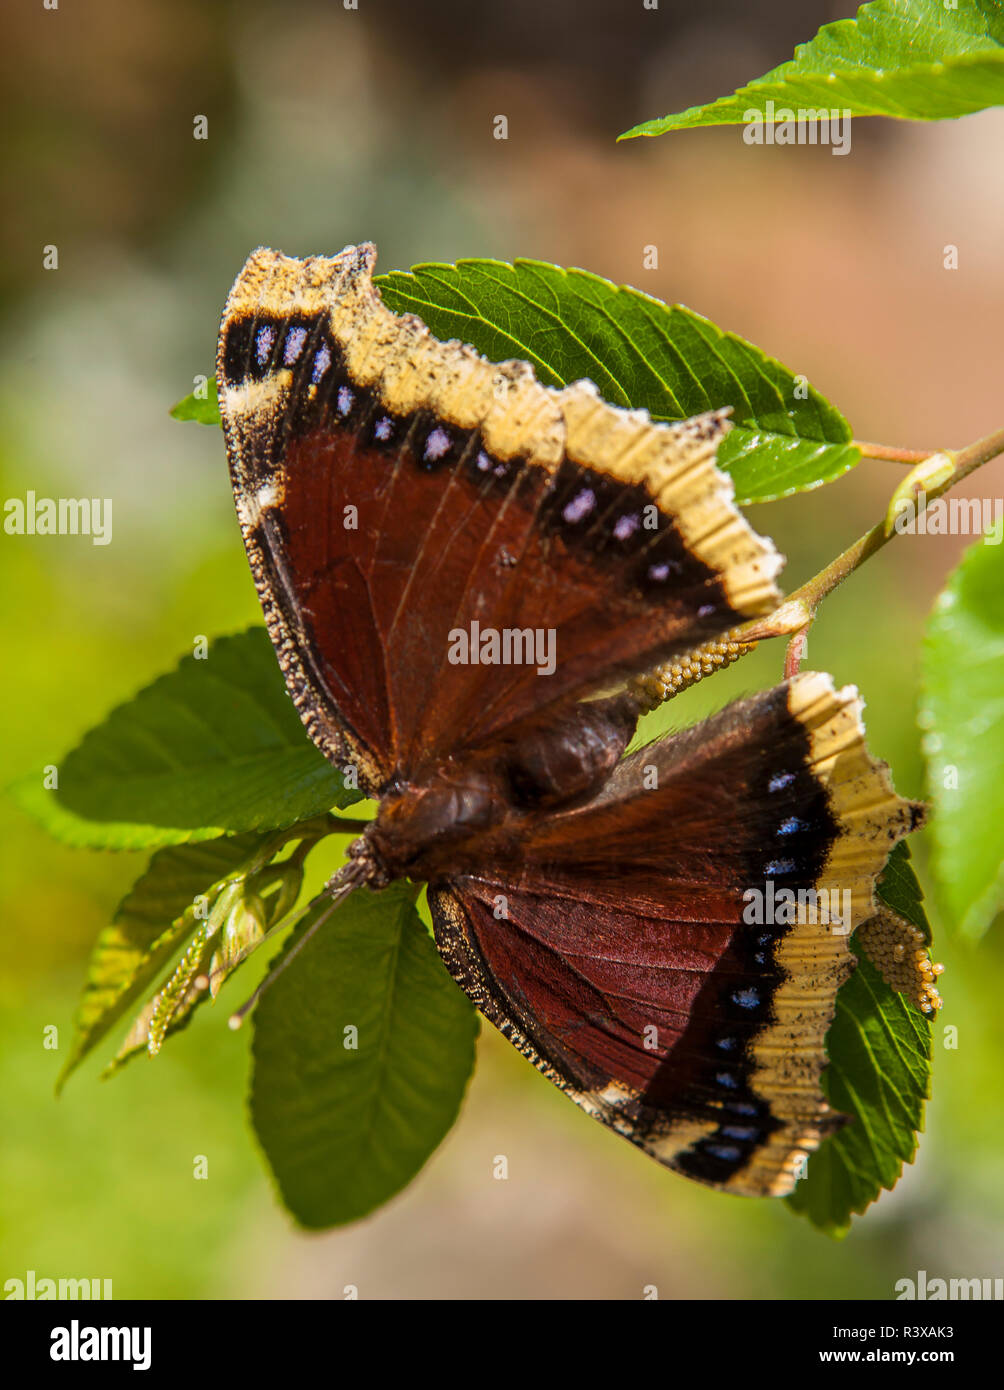 USA, California, La Mesa. Mourning cloak butterfly (Nymphalis antiopa) Stock Photo